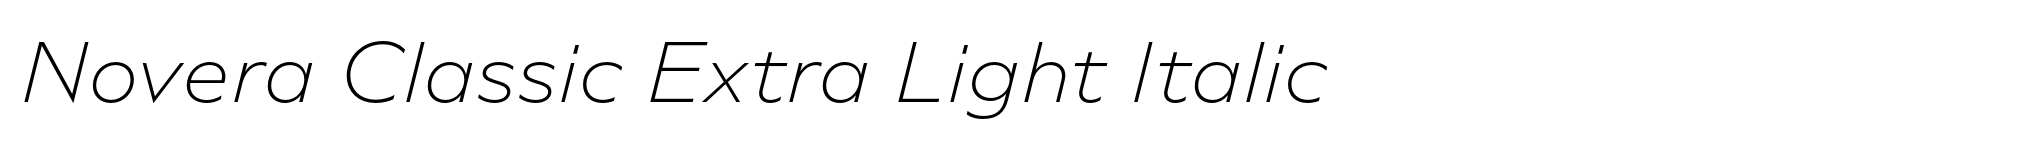 Novera Classic Extra Light Italic image